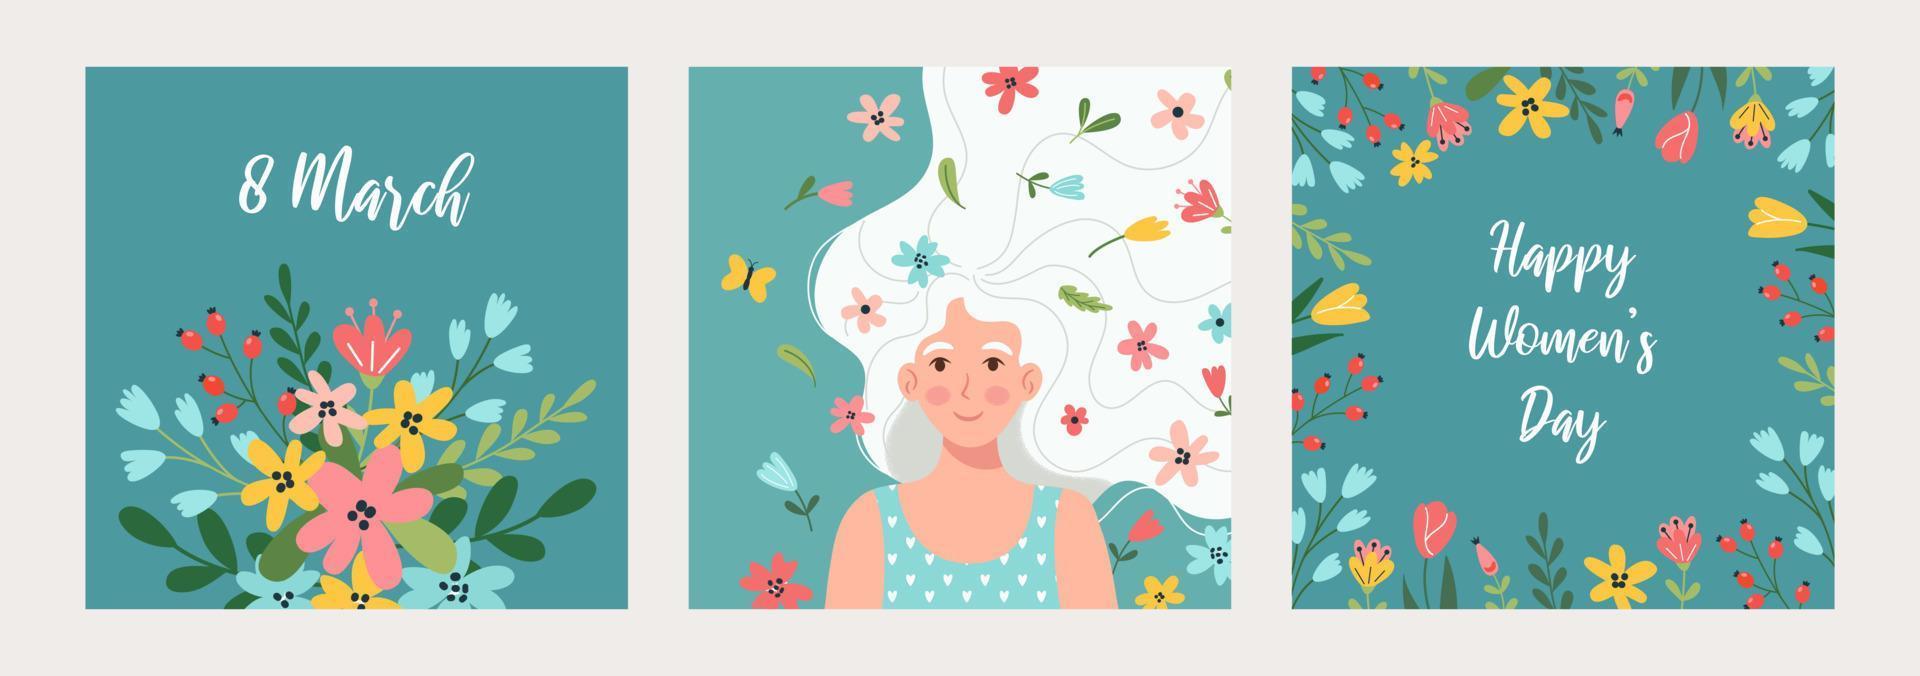 Lycklig kvinnors dag. samling av hälsning kort, affischer, mallar. skön kvinna med blommor i hår, blommig bakgrund med vår blommor. vektor